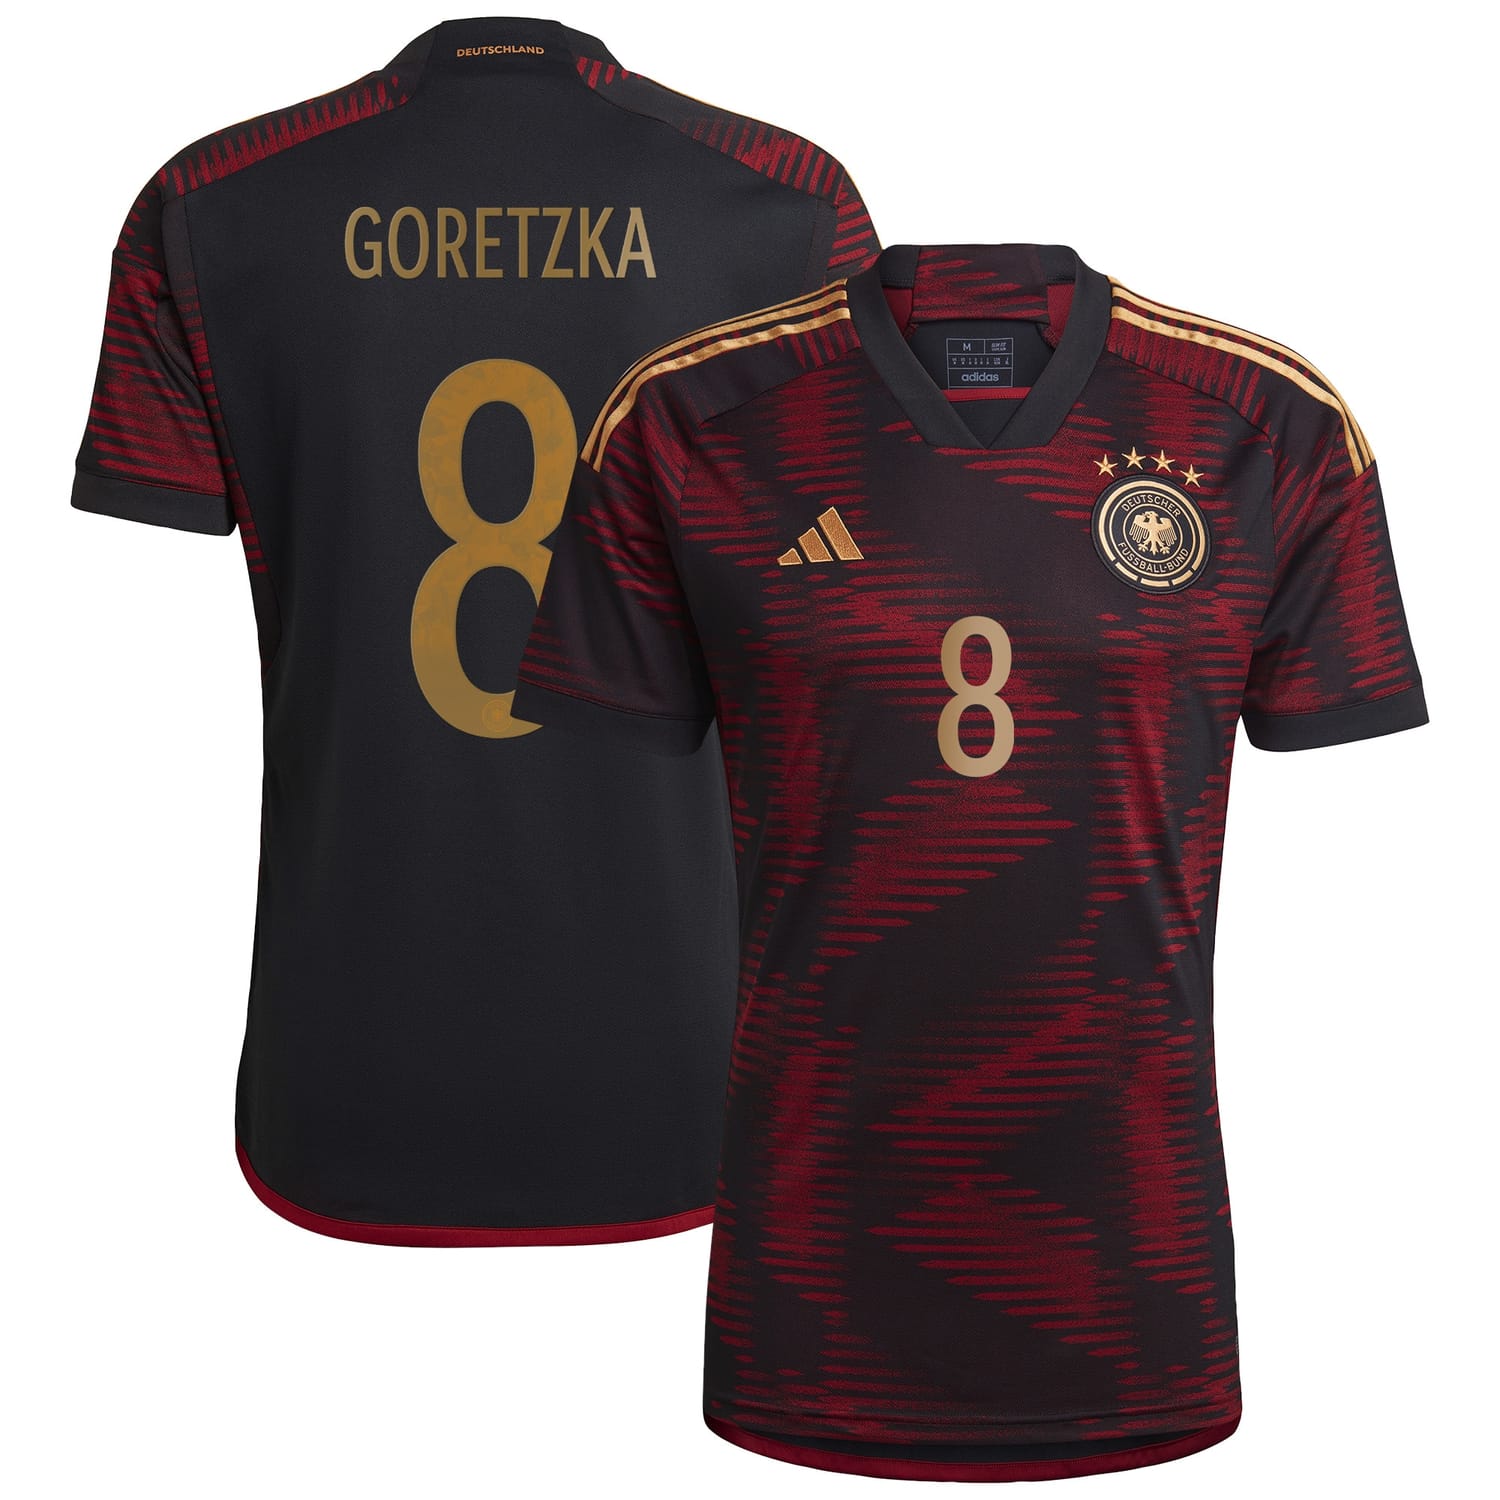 Germany National Team Away Jersey Shirt player Leon Goretzka 8 printing for Men